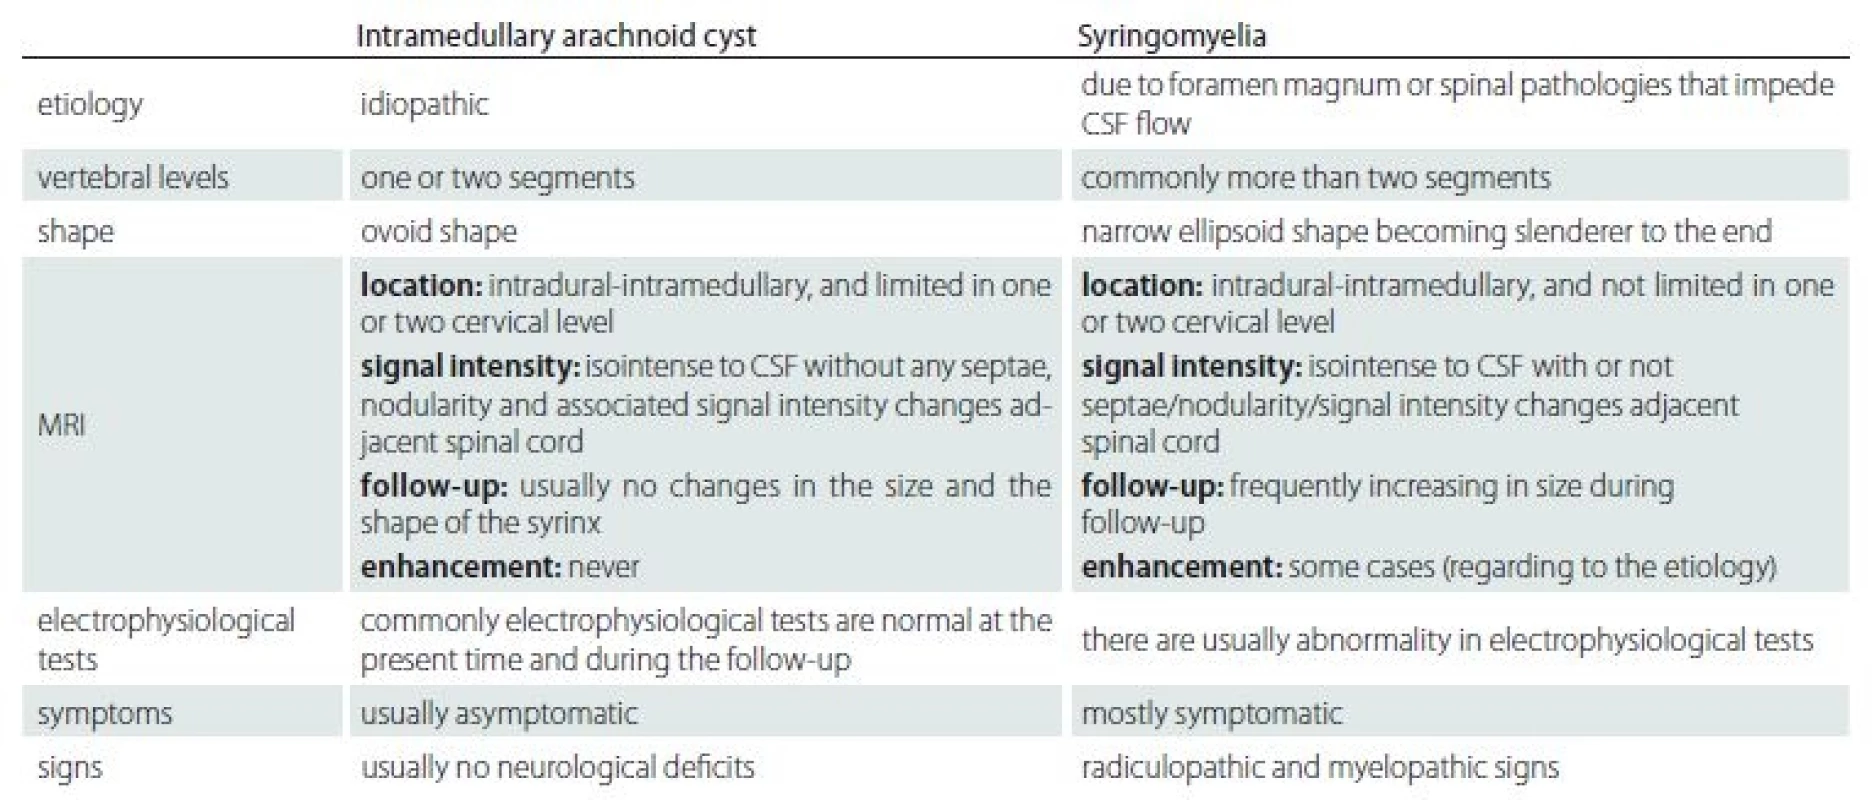 The differences between the intramedullary arachnoid cyst and syringomyelia.